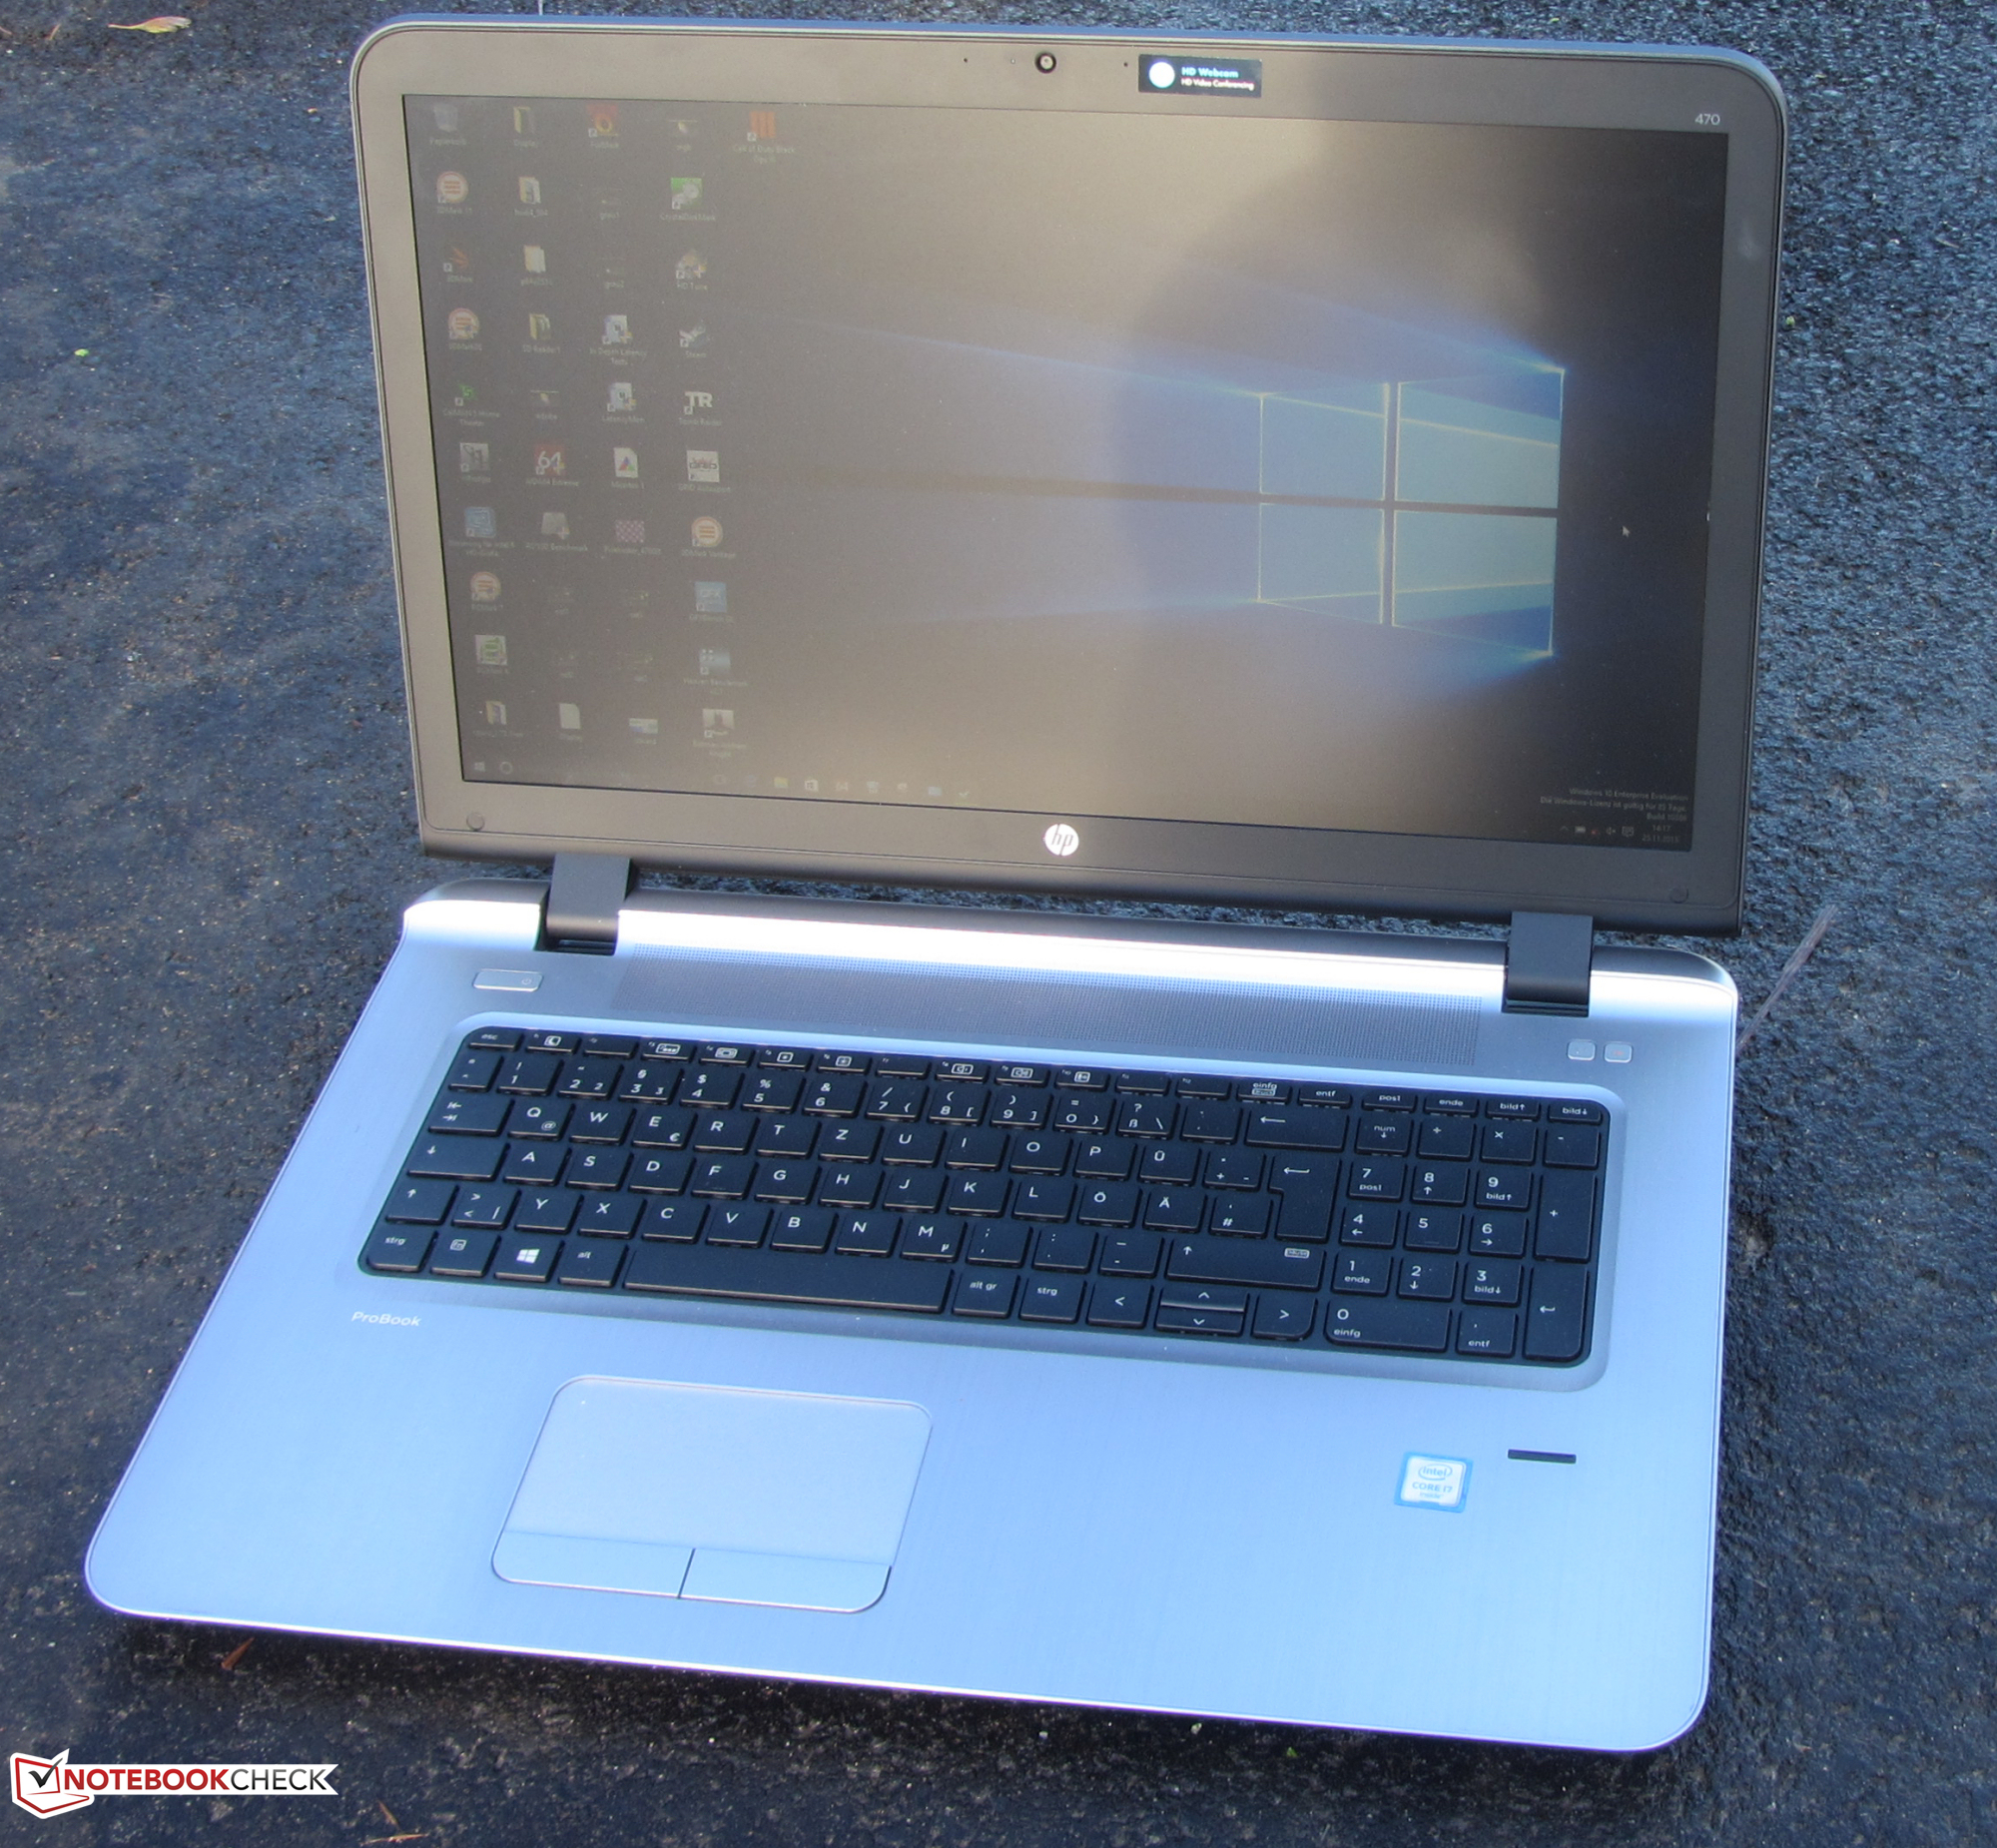 HP ProBook 470 G3 (Core i7-6500U, Radeon R7 M340) Notebook Review